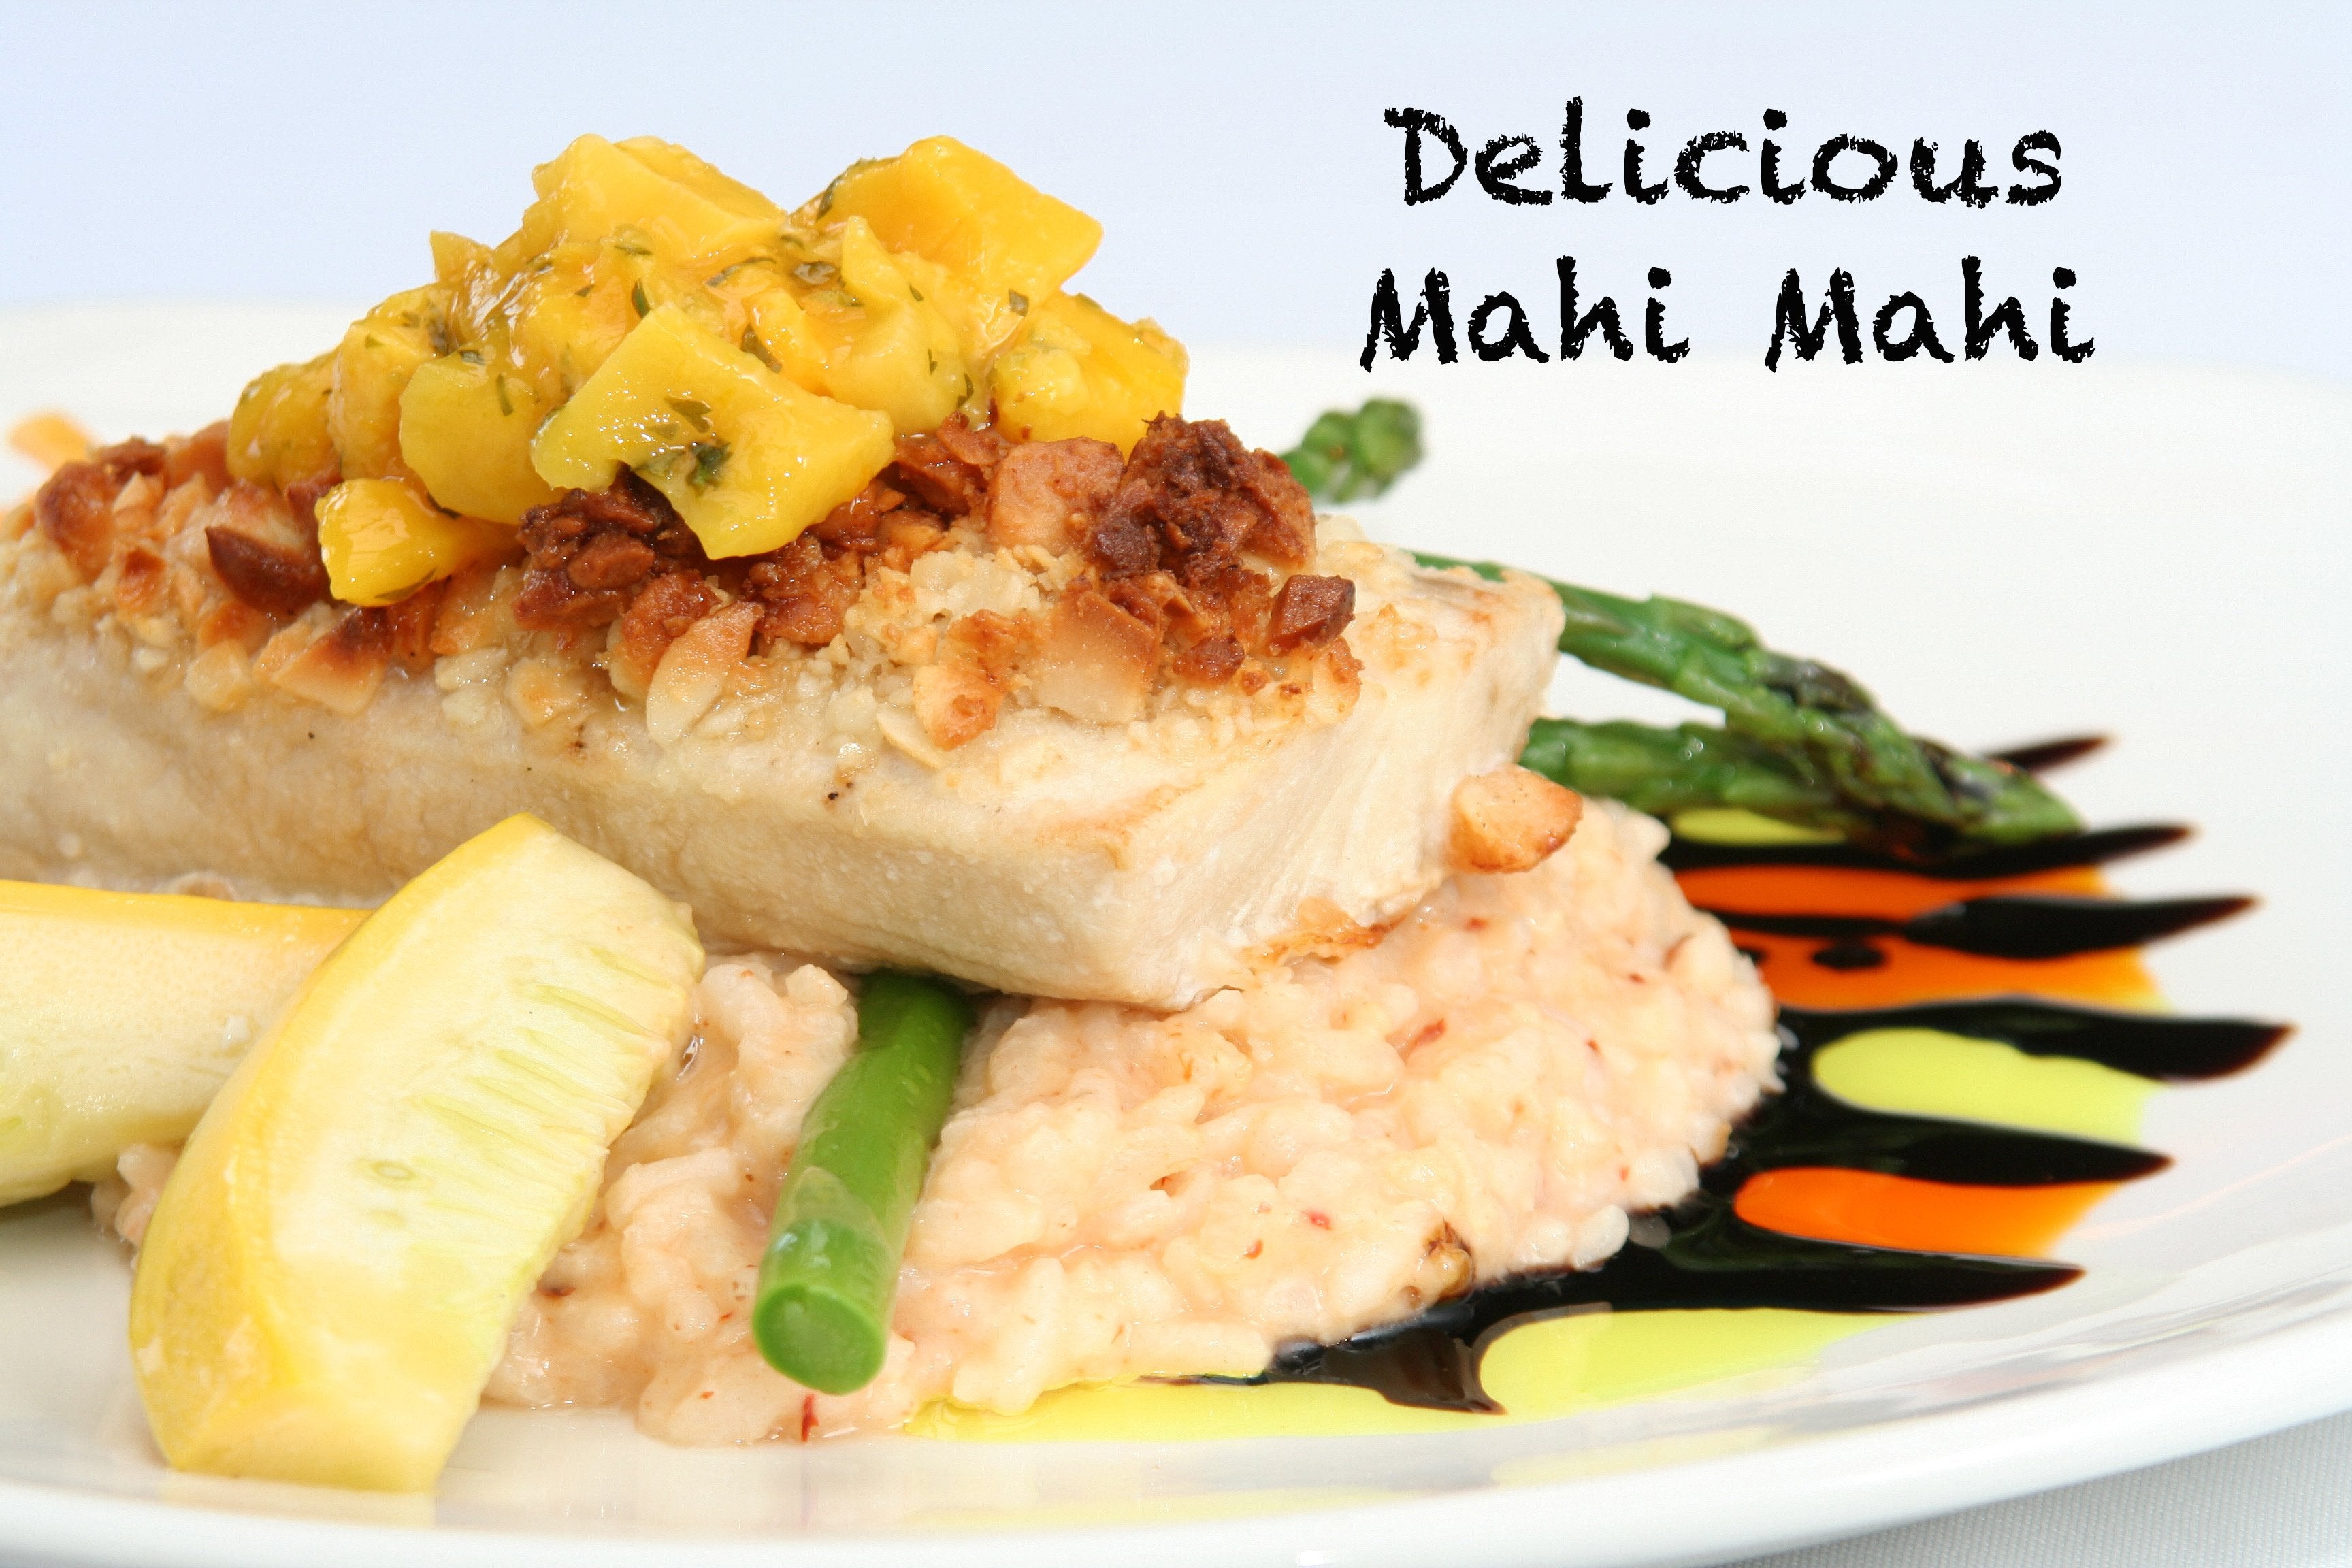 Fish - 4 x 6oz wild-caught Mahi Mahi portions